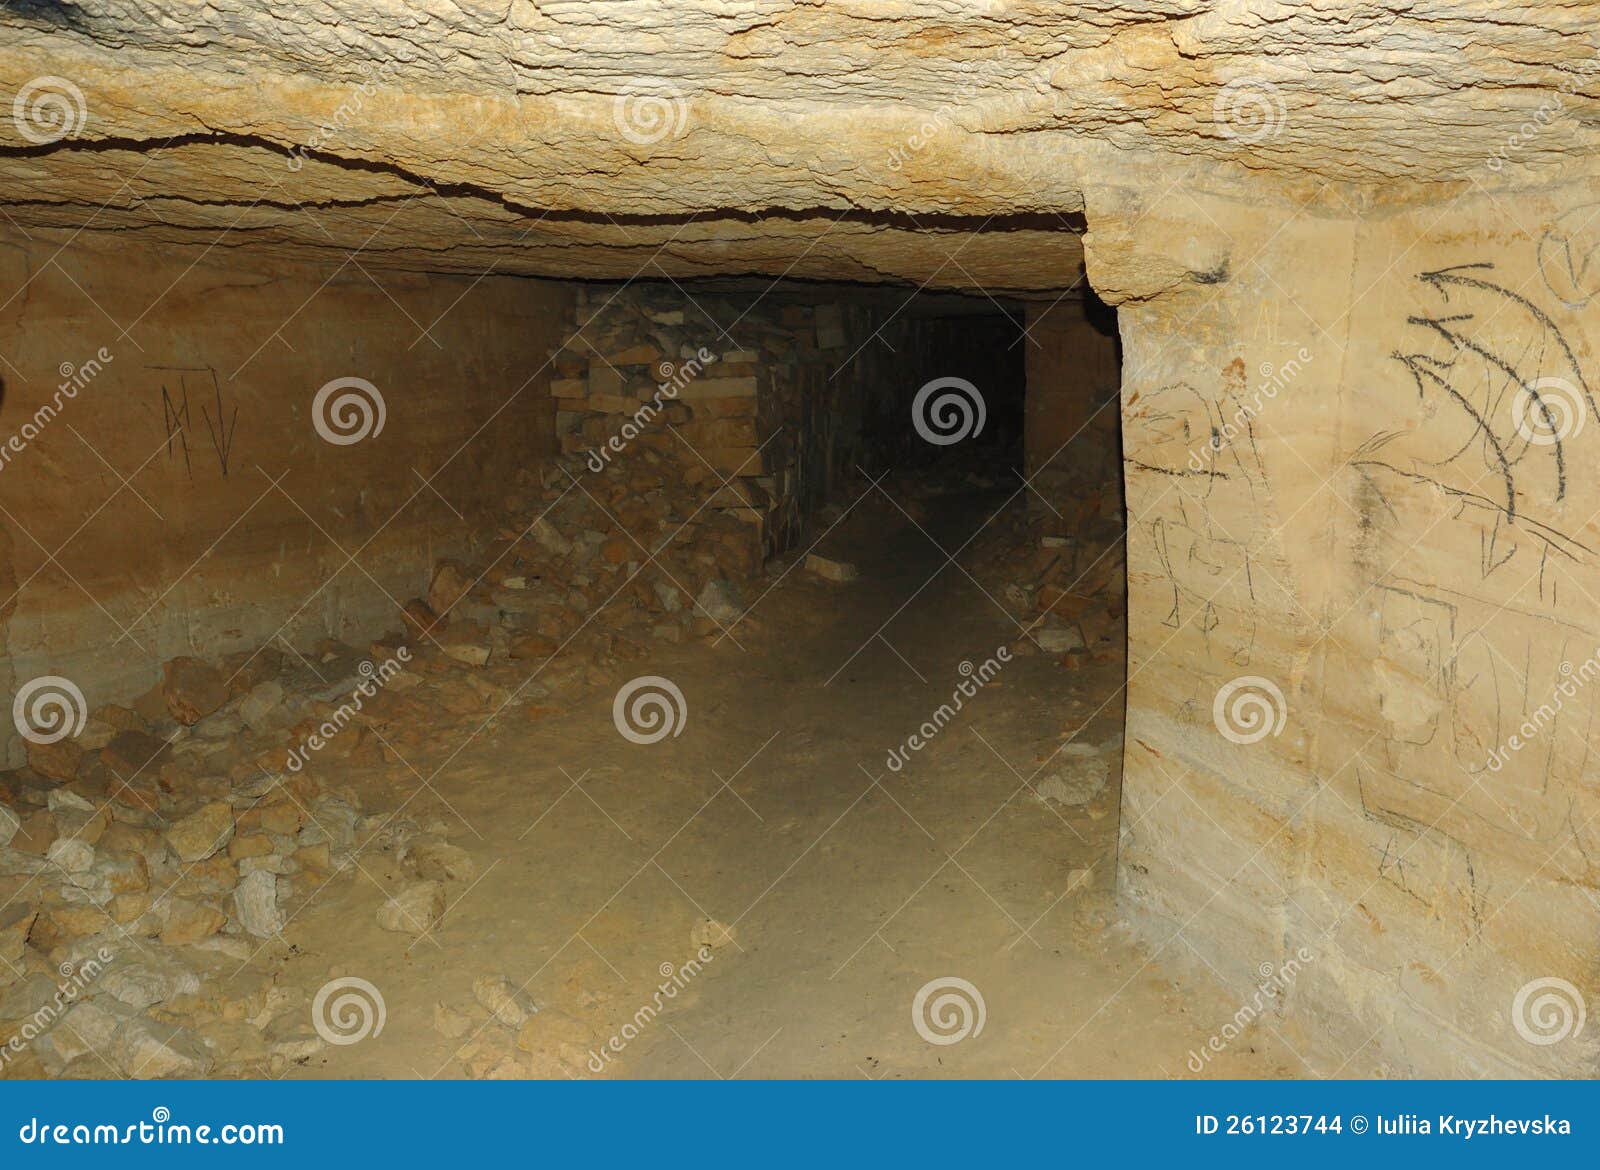 longest catacombs network in world,odessa, ukraine